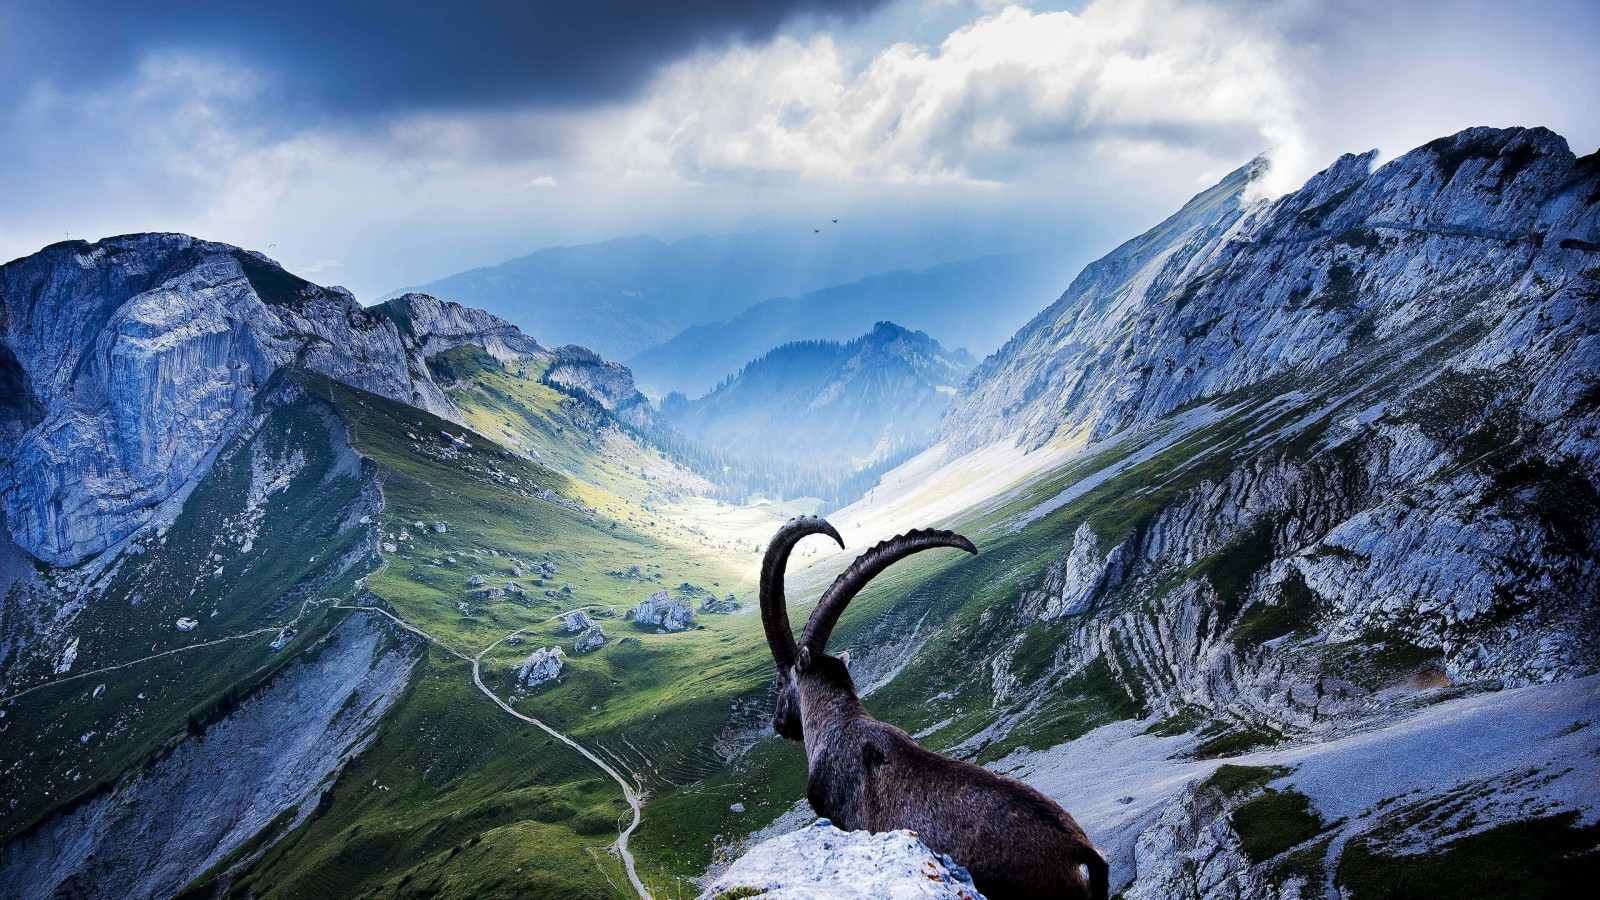 Goat at Pilatus, Switzerland Wallpaper for Desktop 1600x900